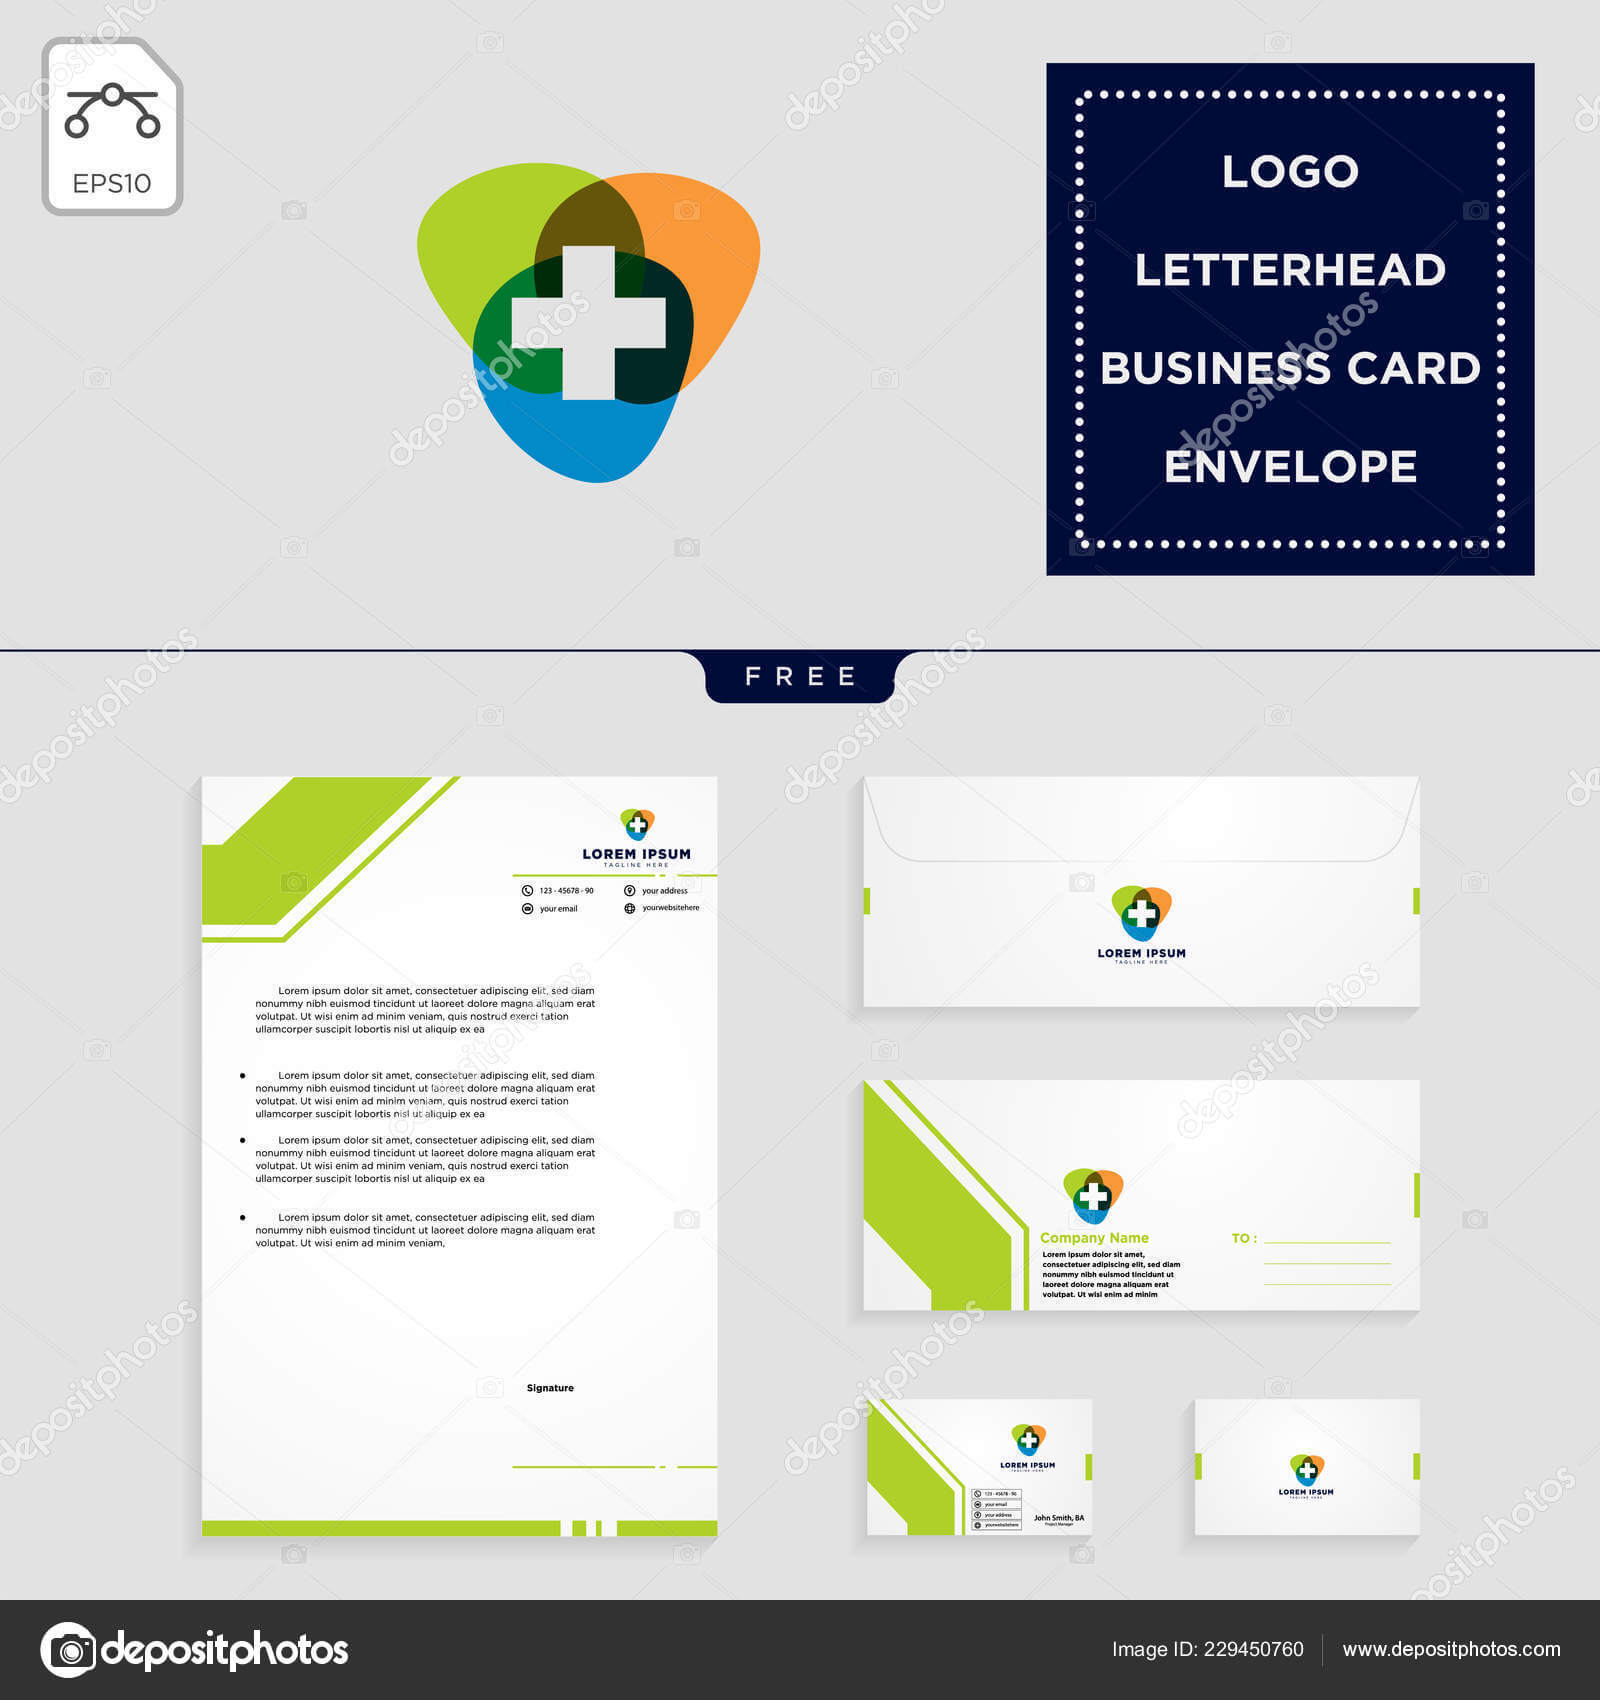 Medical Cross Logo Template Vector Illustration Free Intended For Business Card Letterhead Envelope Template